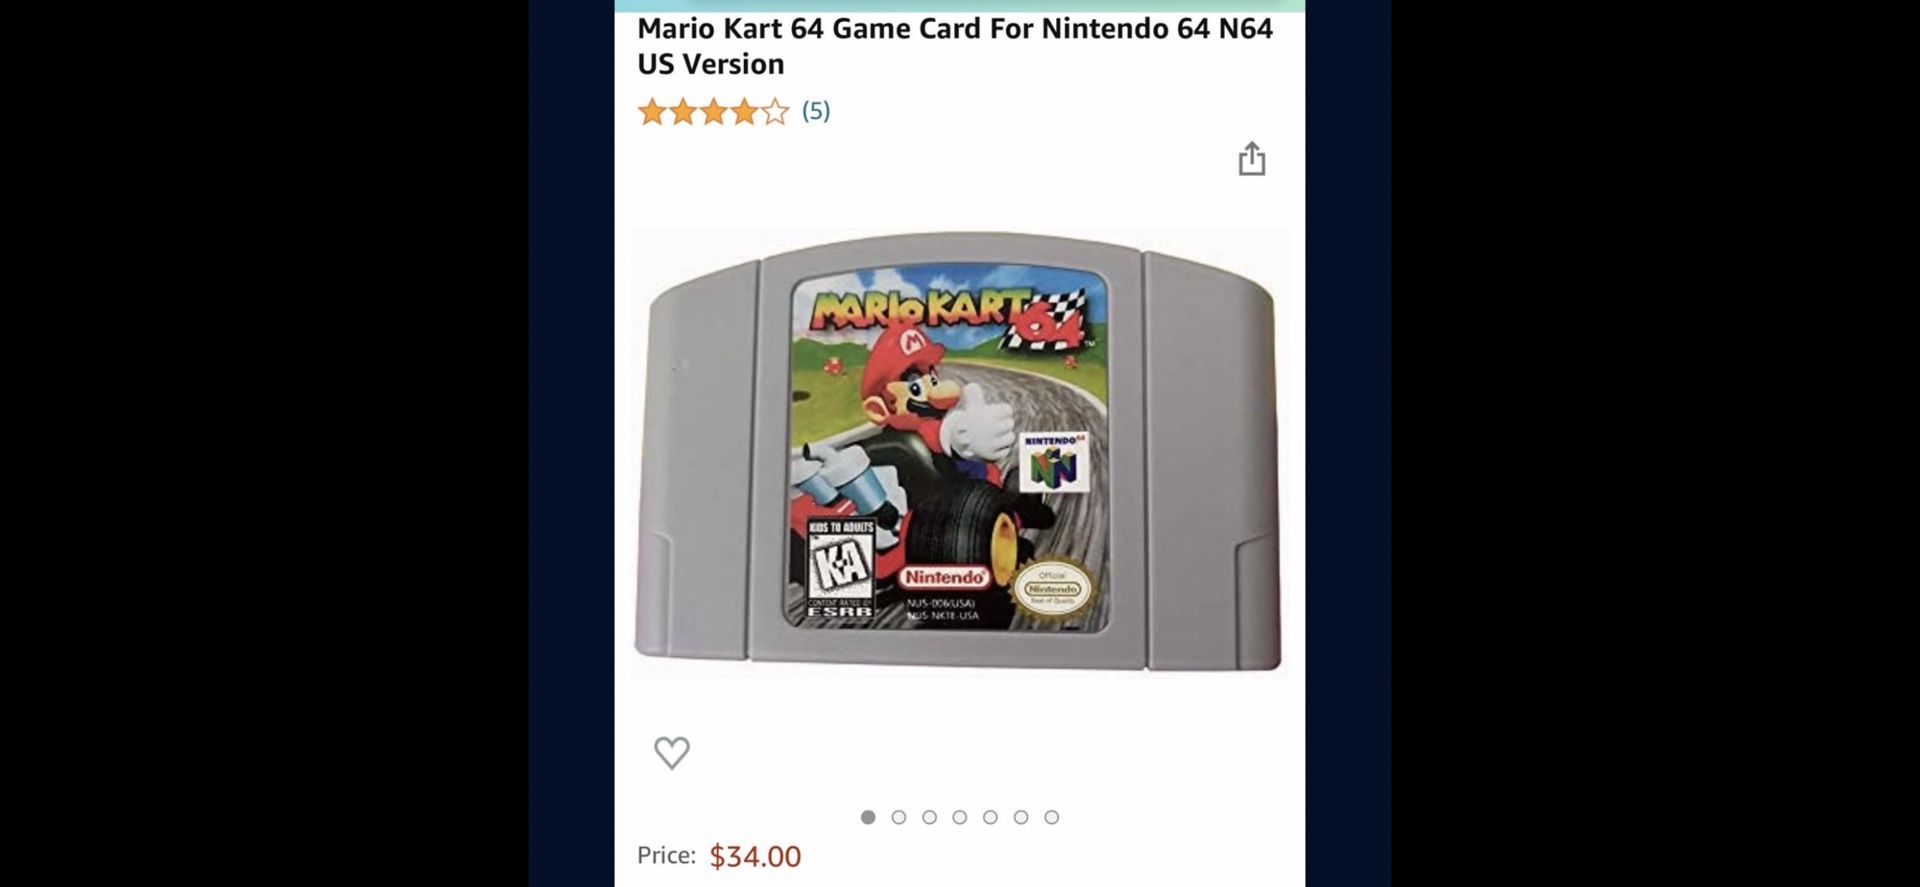 Mario Kart 64 Game Card For Nintendo 64 N64 US Version